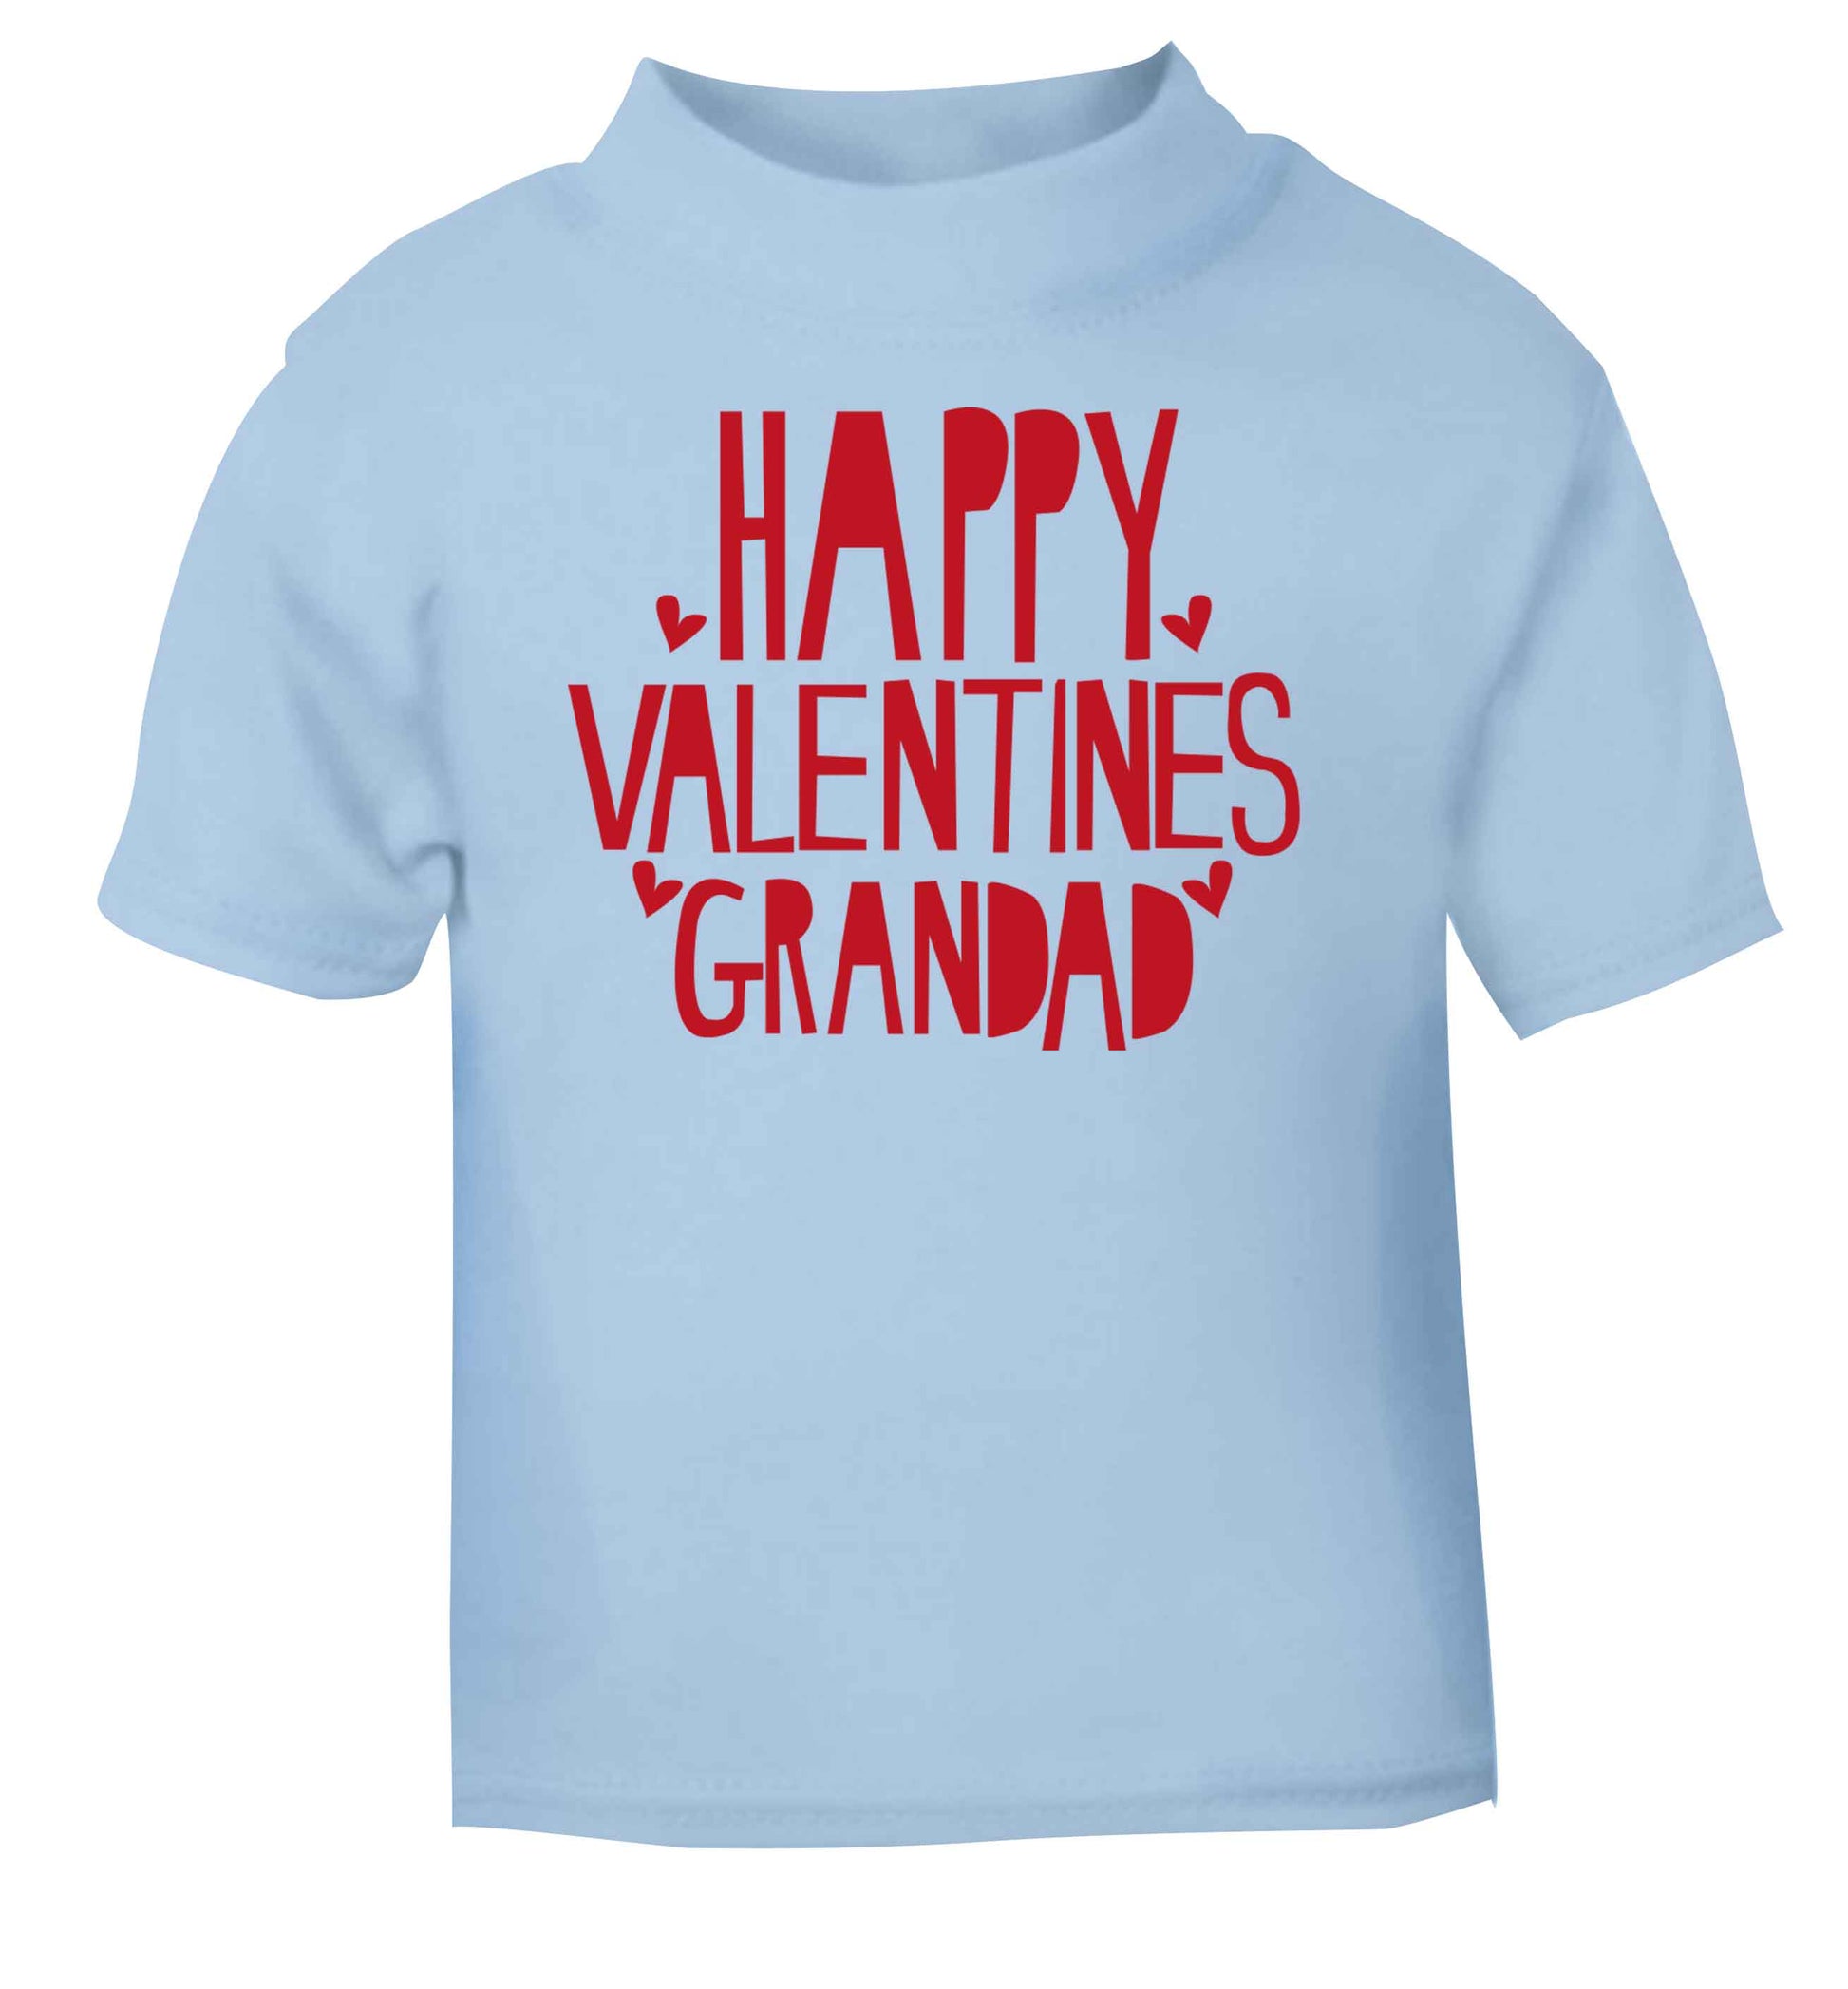 Happy valentines grandad light blue baby toddler Tshirt 2 Years